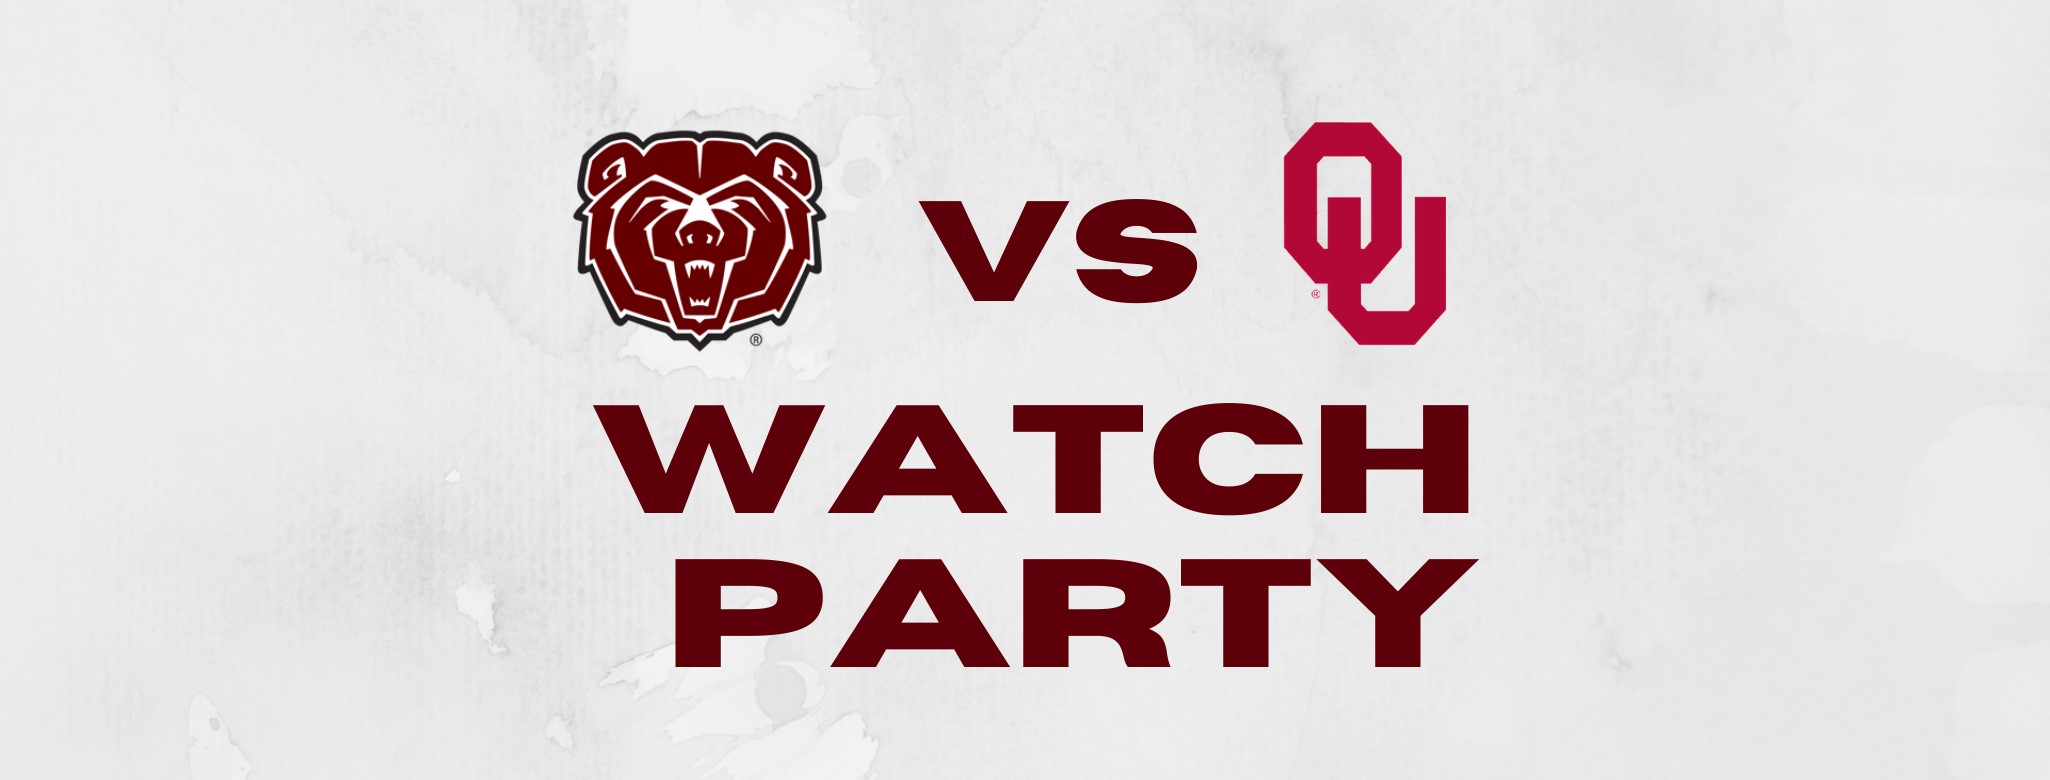 Missouri State Football at Oklahoma Watch Party — at JQH Arena